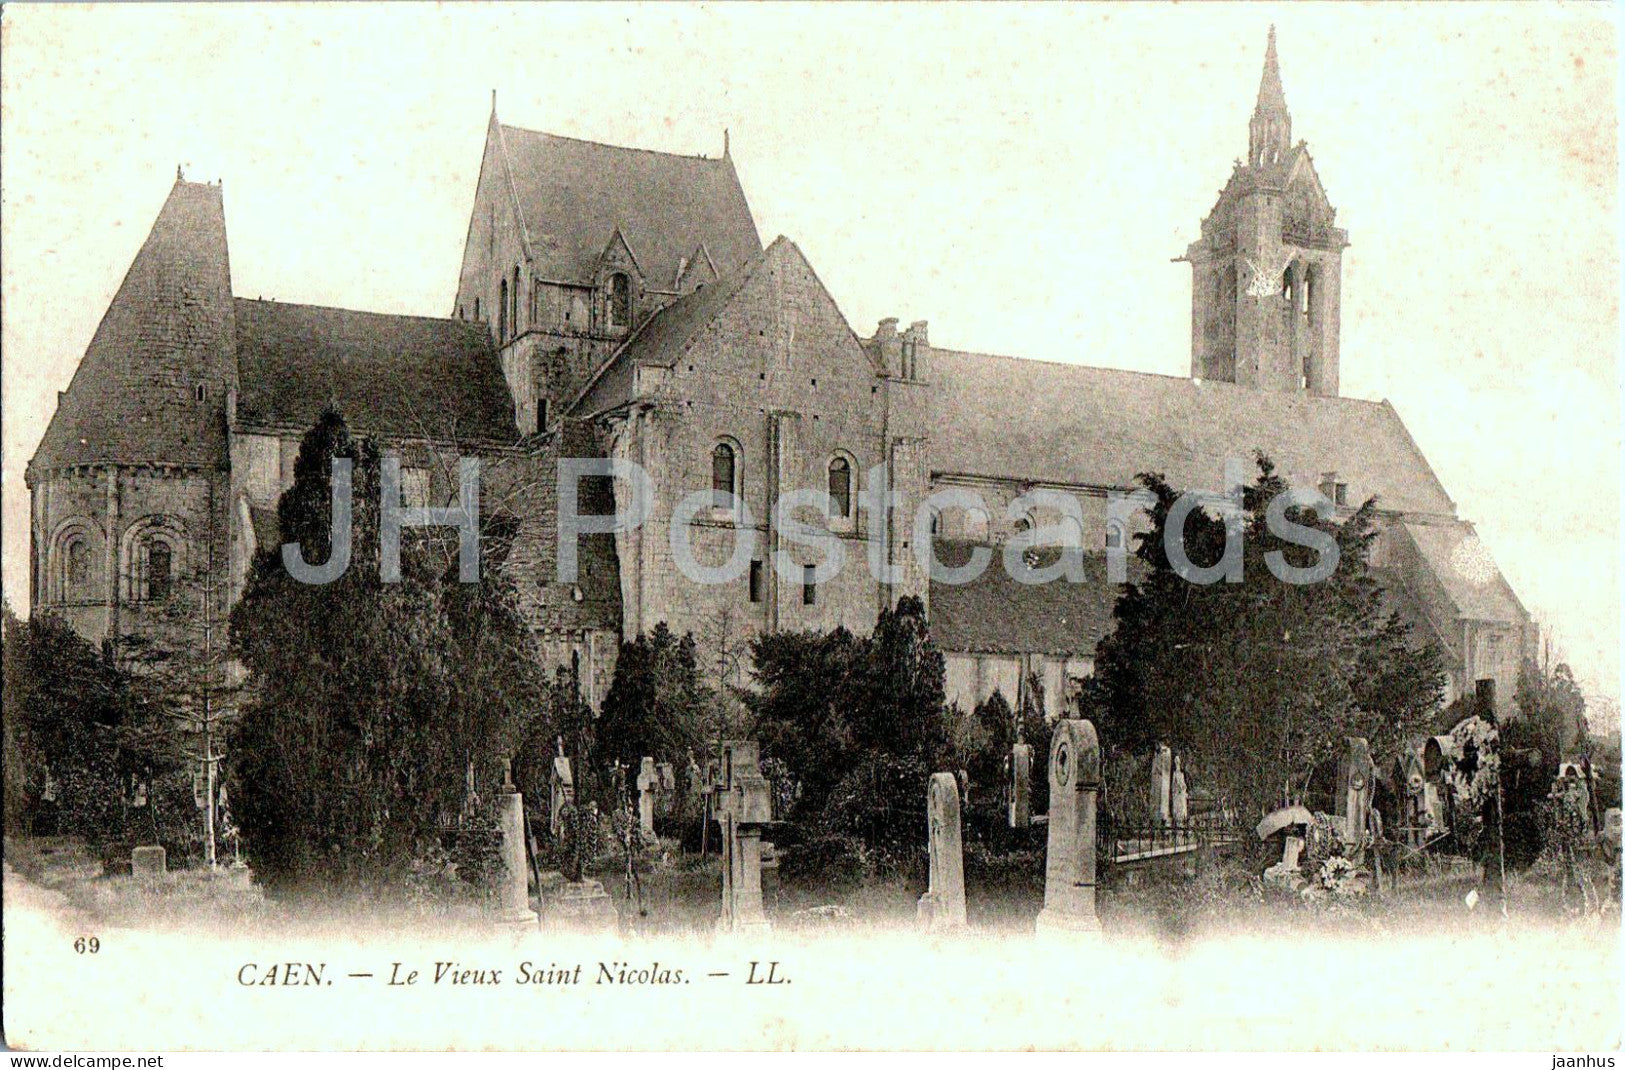 Caen - Le Vieux Saint Nicolas - 69 - old postcard - France - unused - JH Postcards